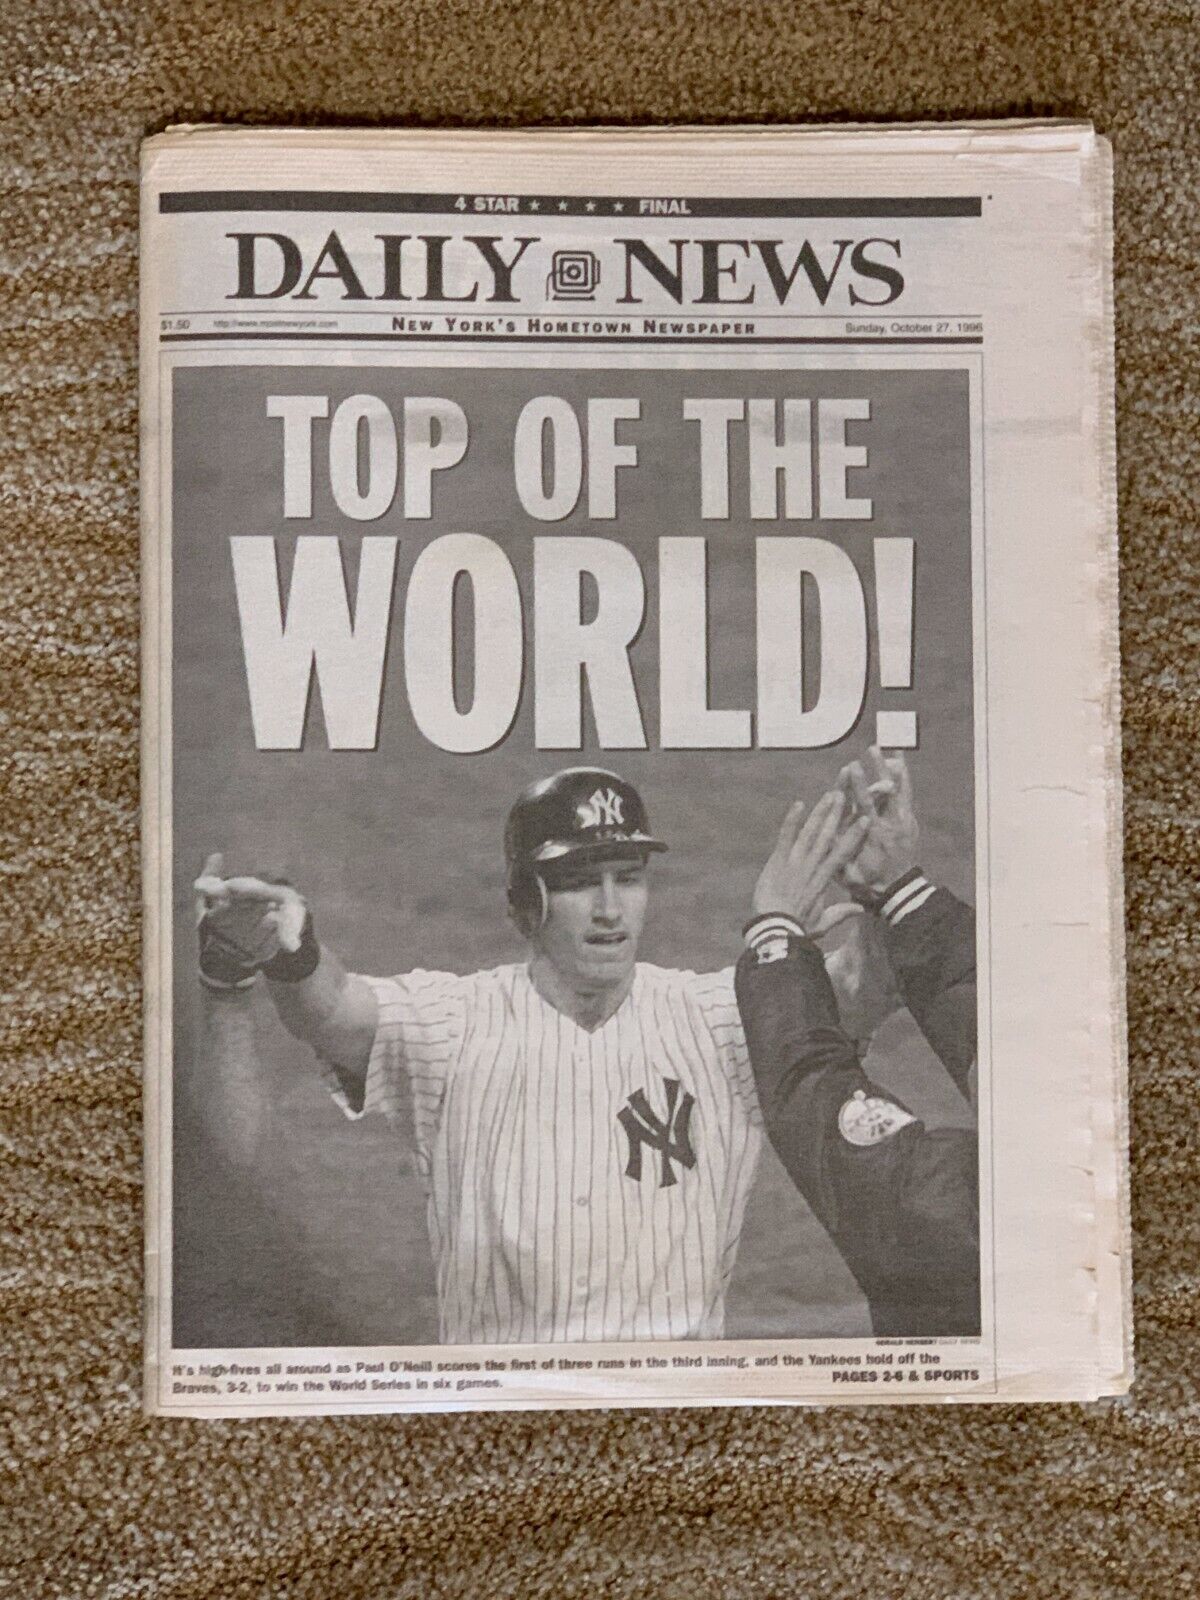 NEW YORK YANKEES 1996 WORLD SERIES CHAMPIONS DAILY NEWS NEWSPAPER Paul O\'Neill